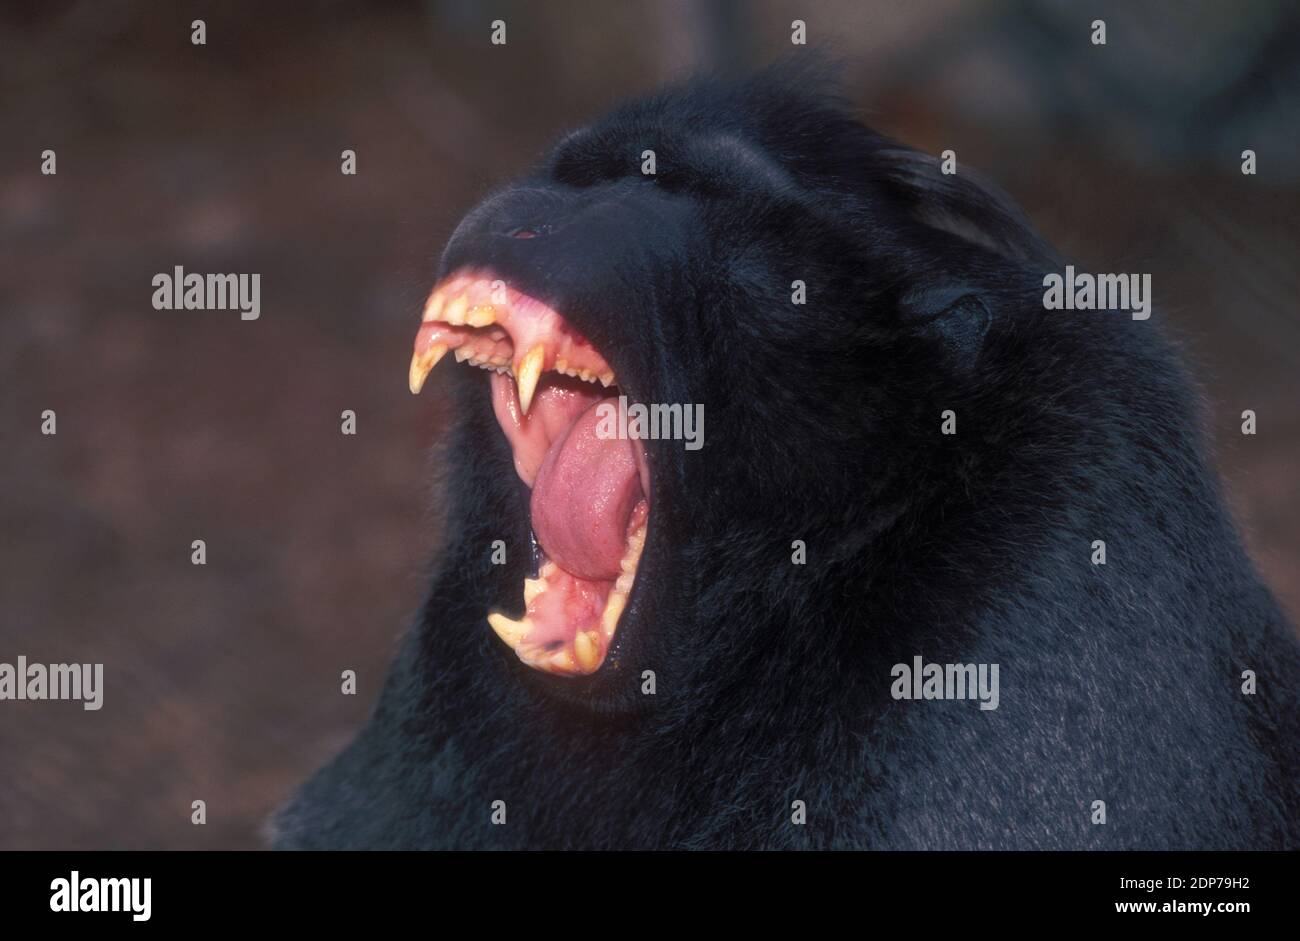 Schwarze Makaken zeigen Zähne in einer Bedrohung Stockfoto